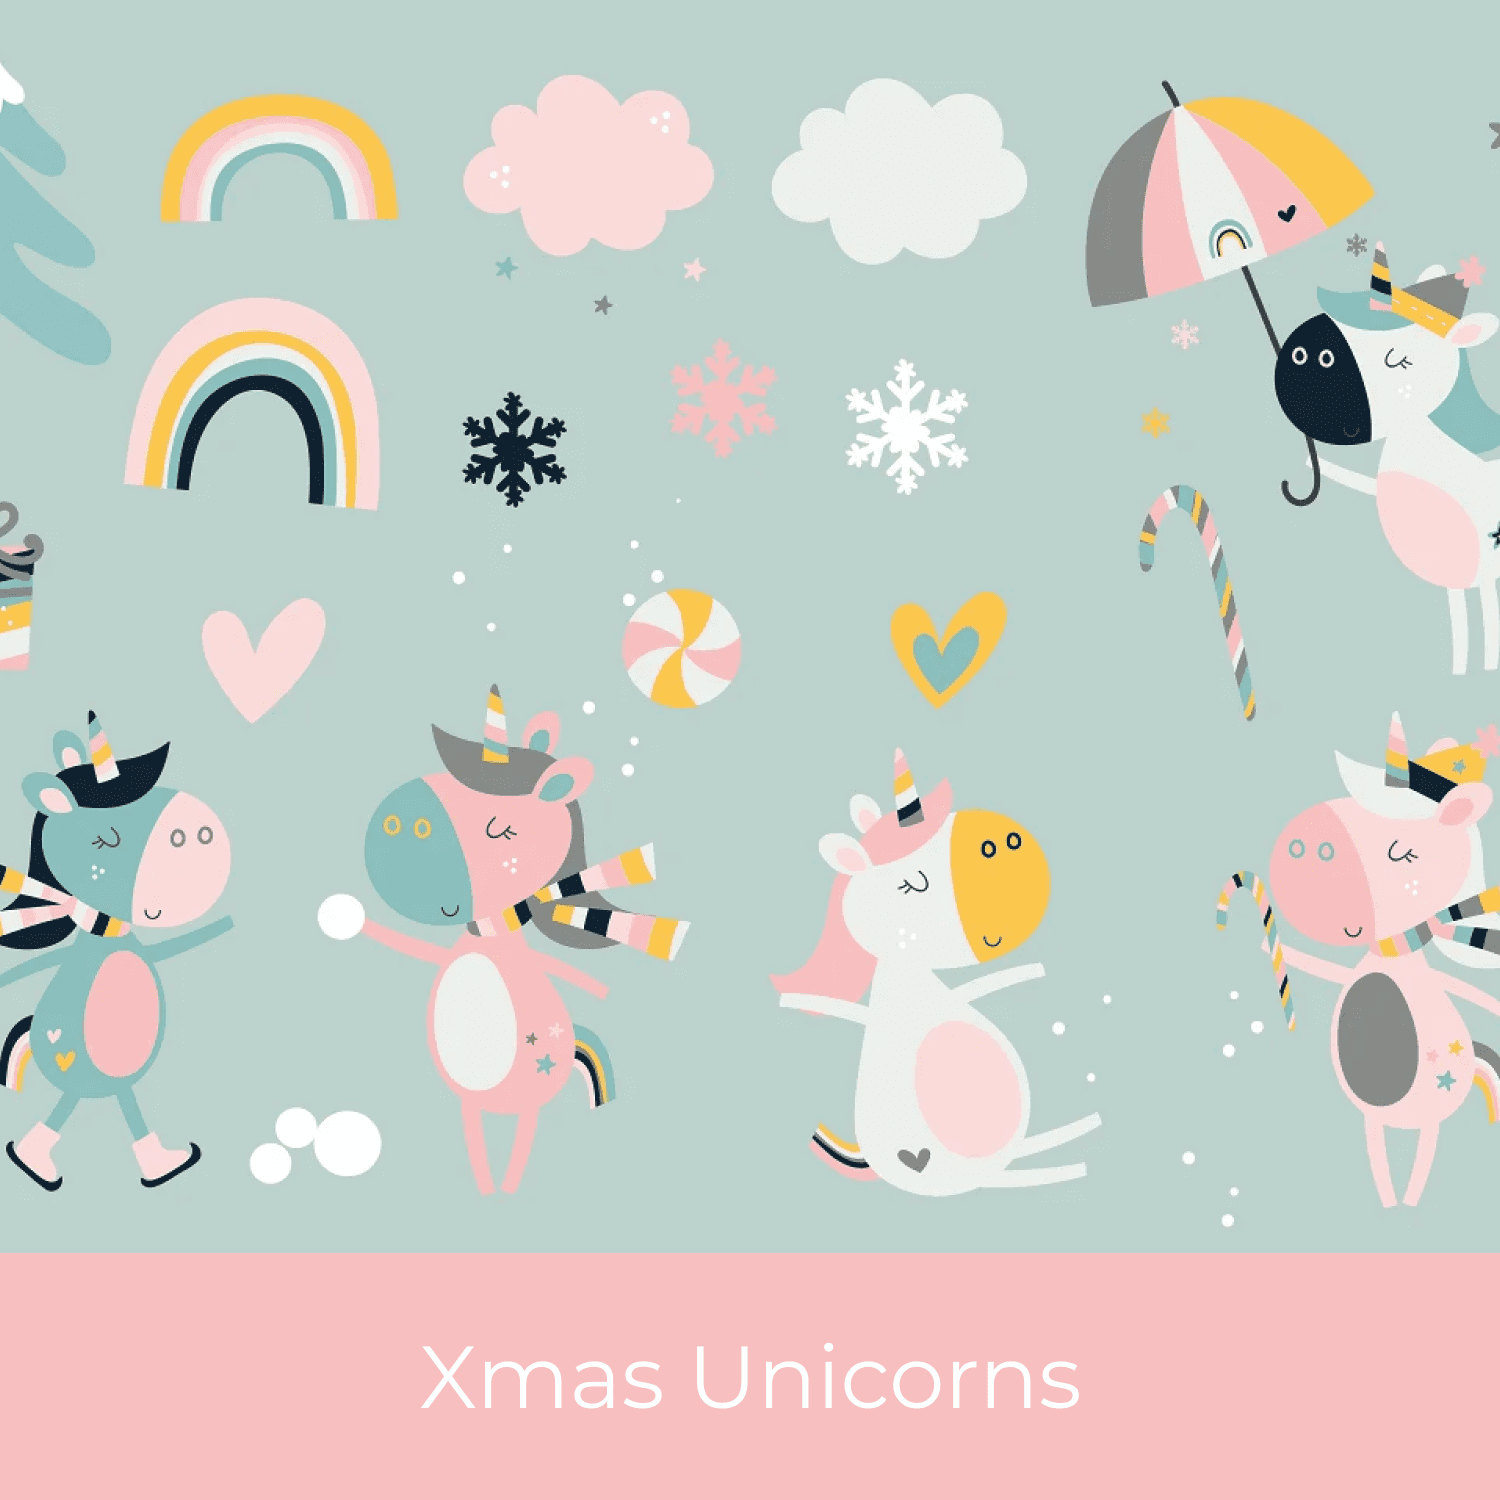 Xmas Unicorns. cover.